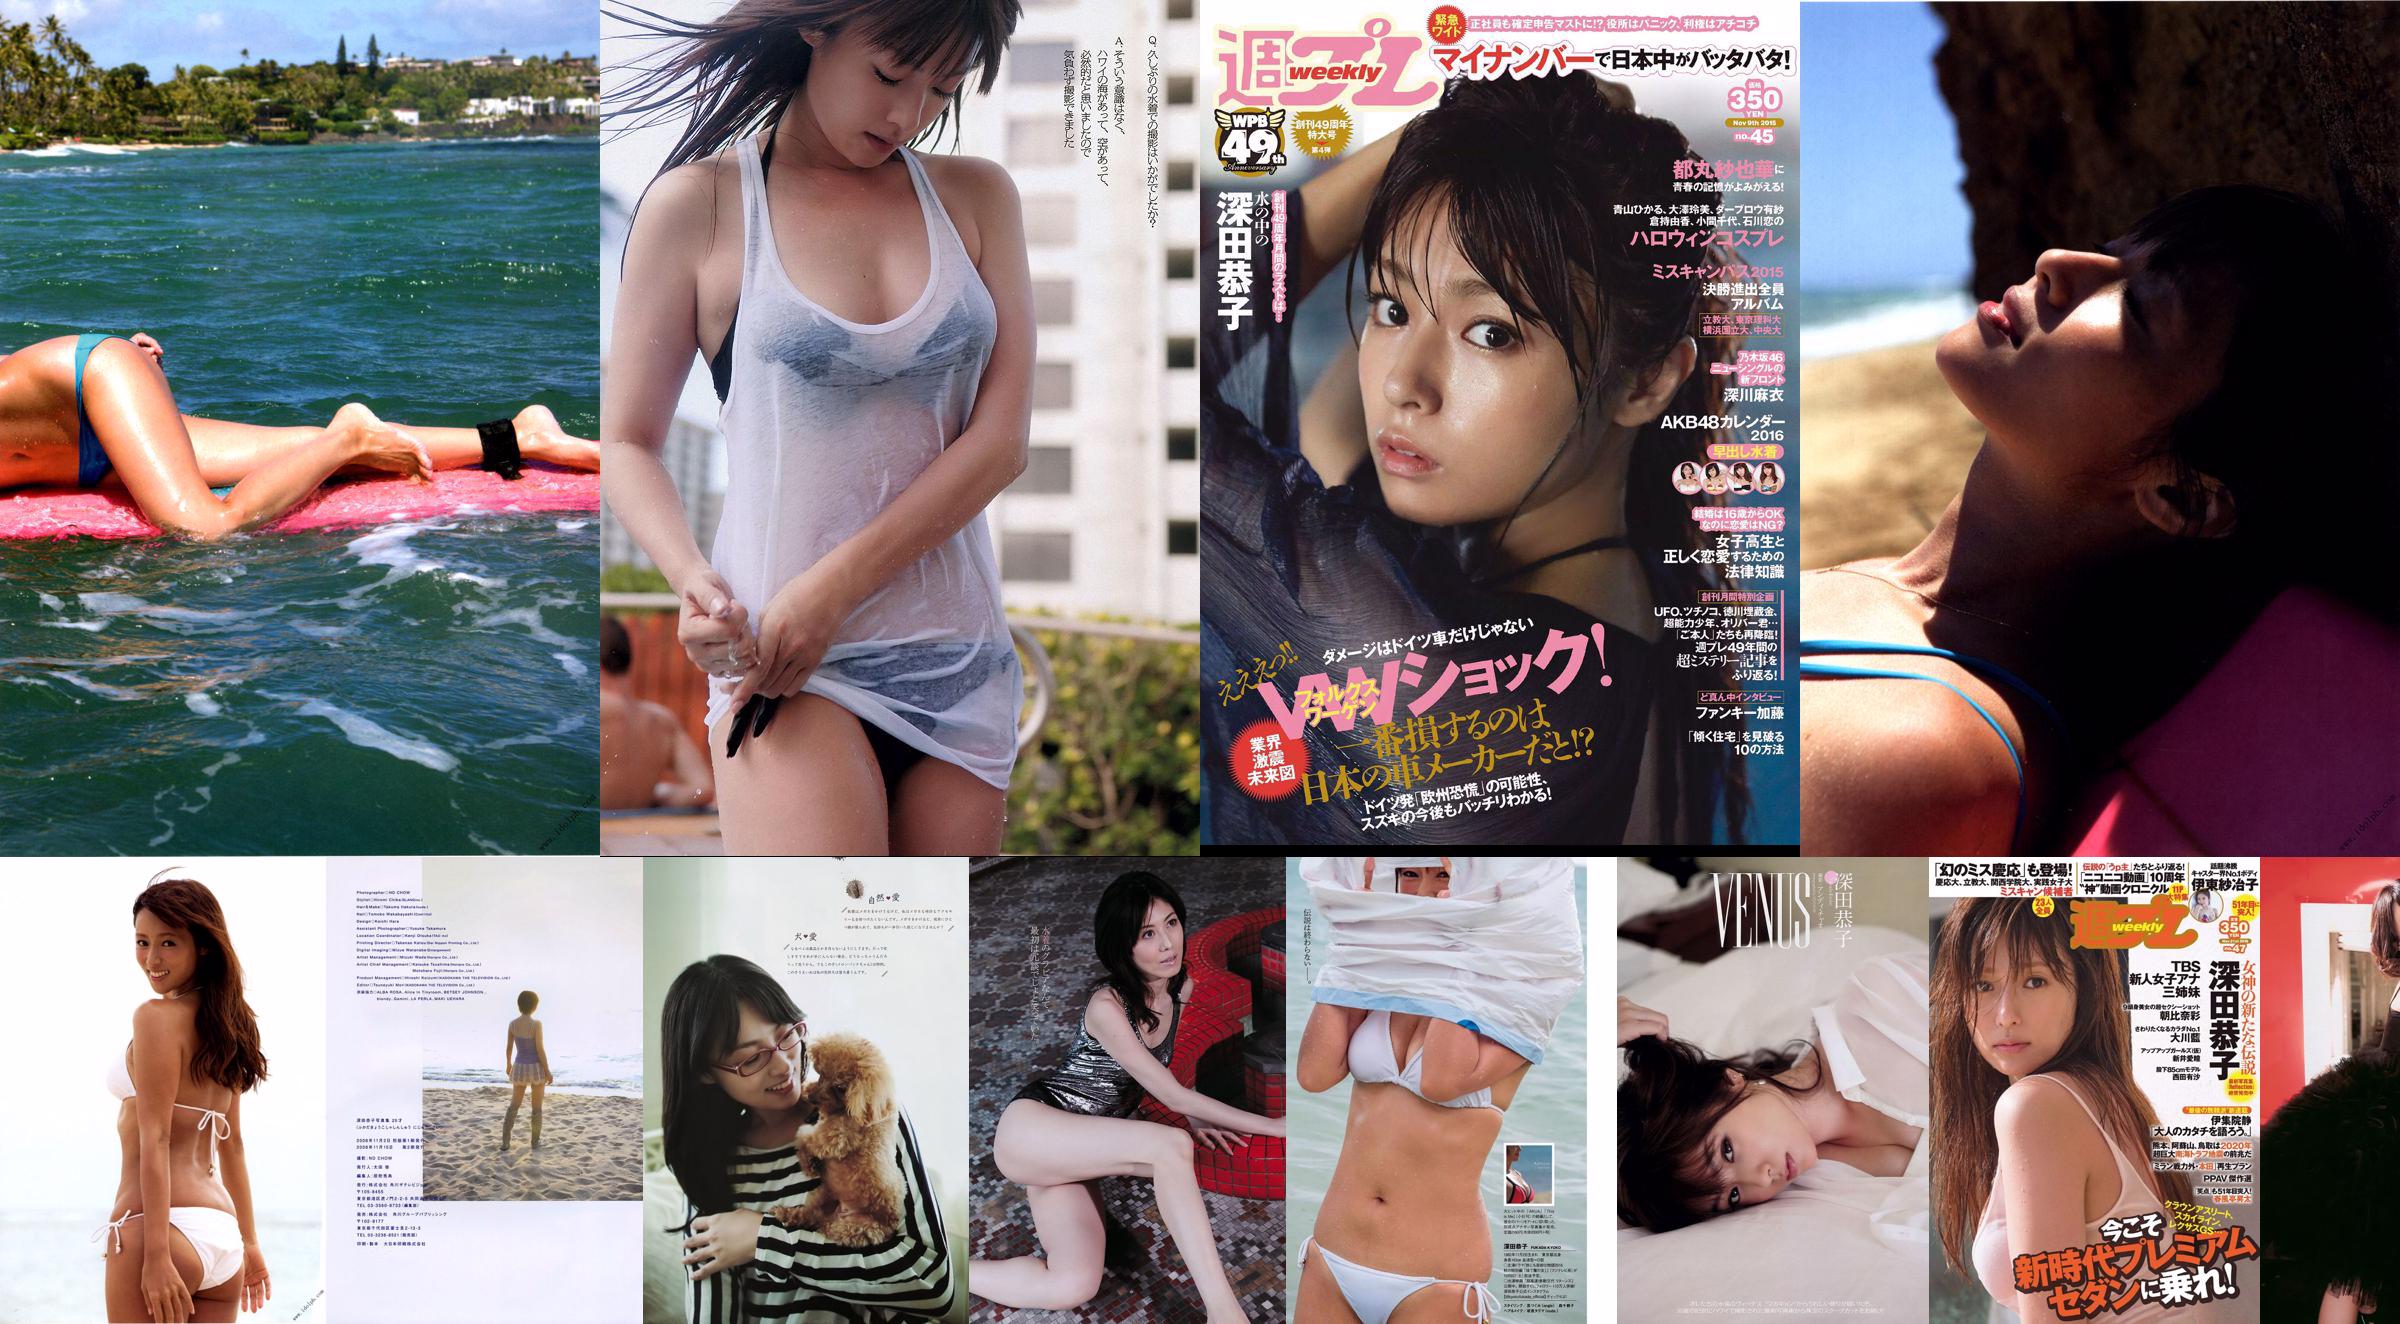 Kyoko Fukada, Aimi Enozawa, Tang Tian [Wöchentlicher junger Sprung] 2016 Nr. 34 Fotomagazin No.33b494 Seite 4